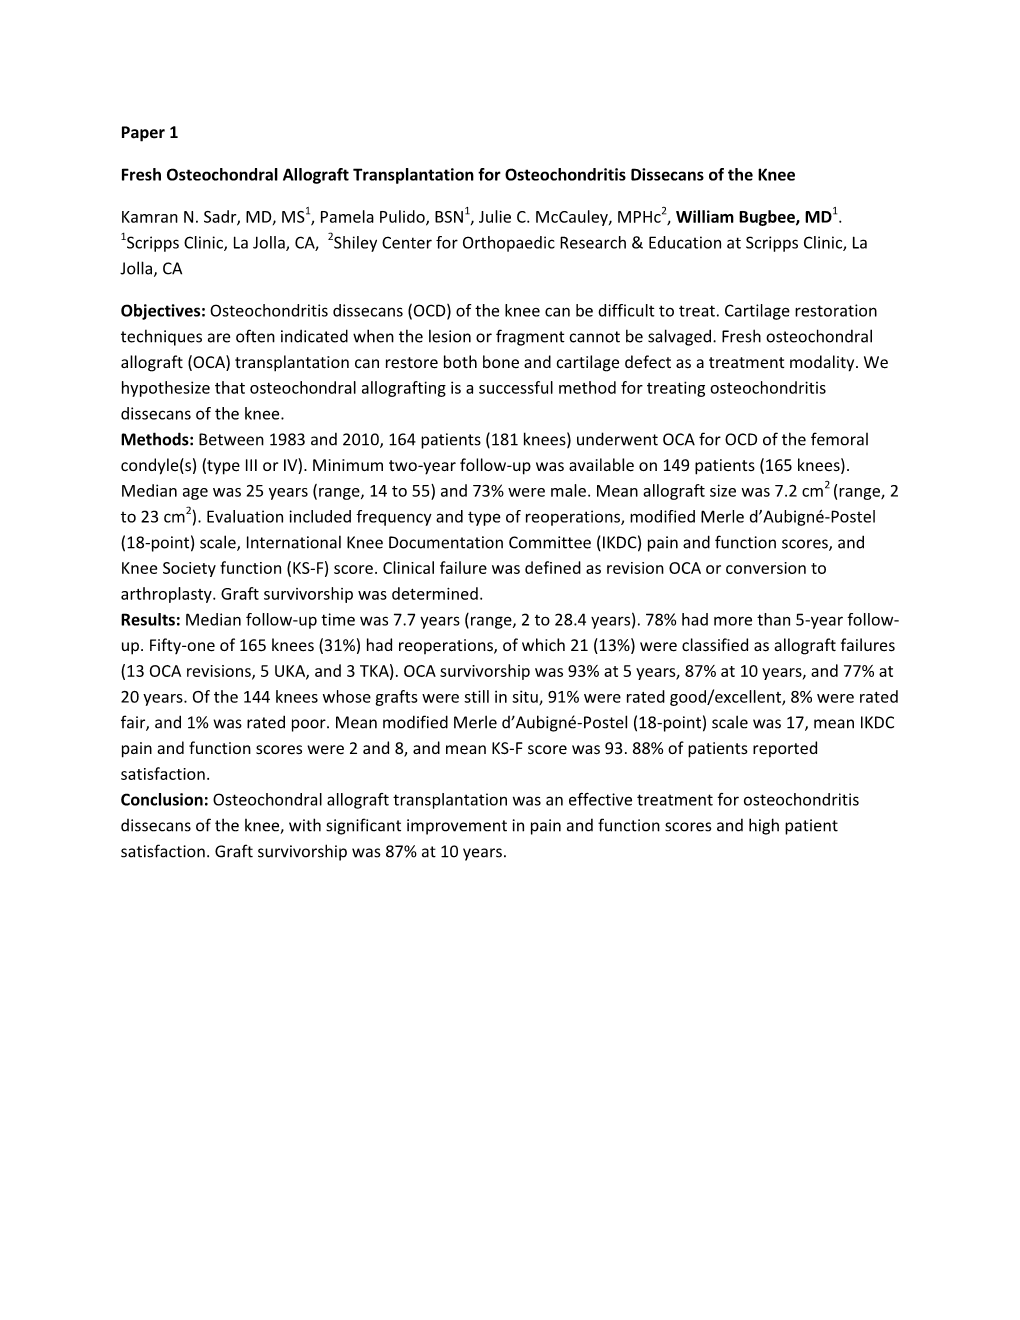 Paper 1 Fresh Osteochondral Allograft Transplantation for Osteochondritis